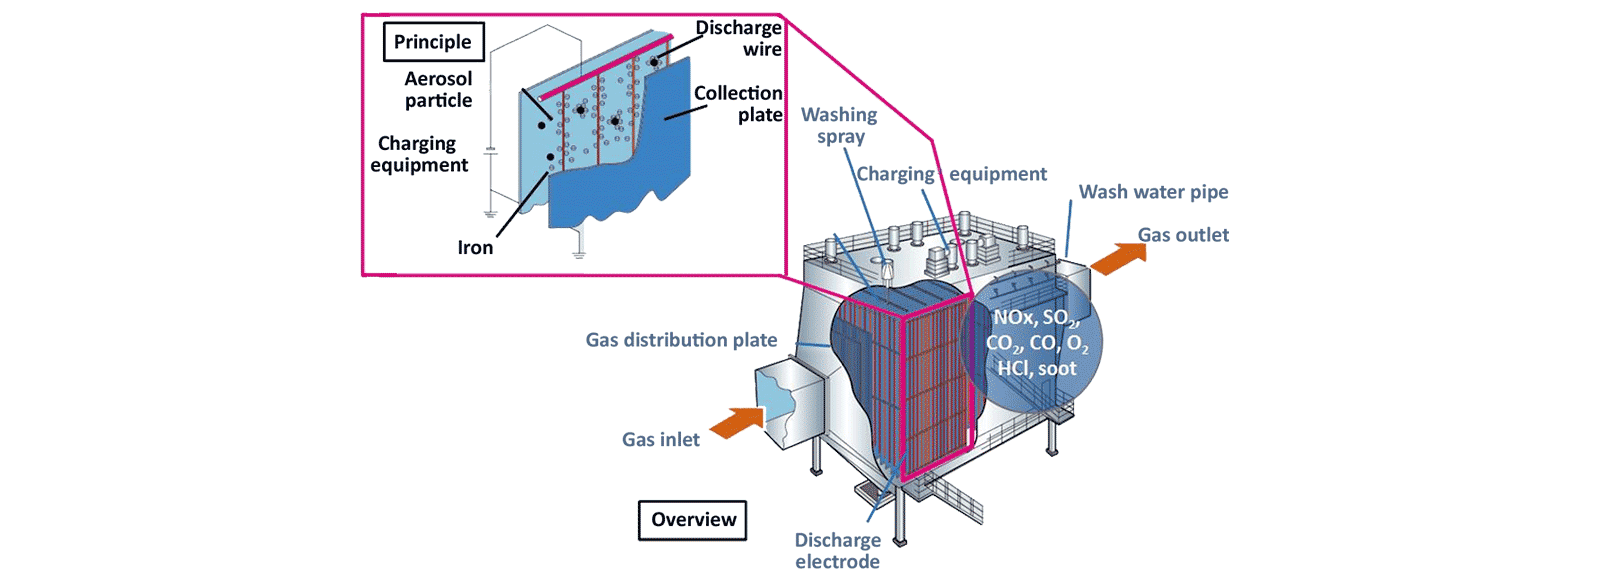 Electrostatic precipitator
